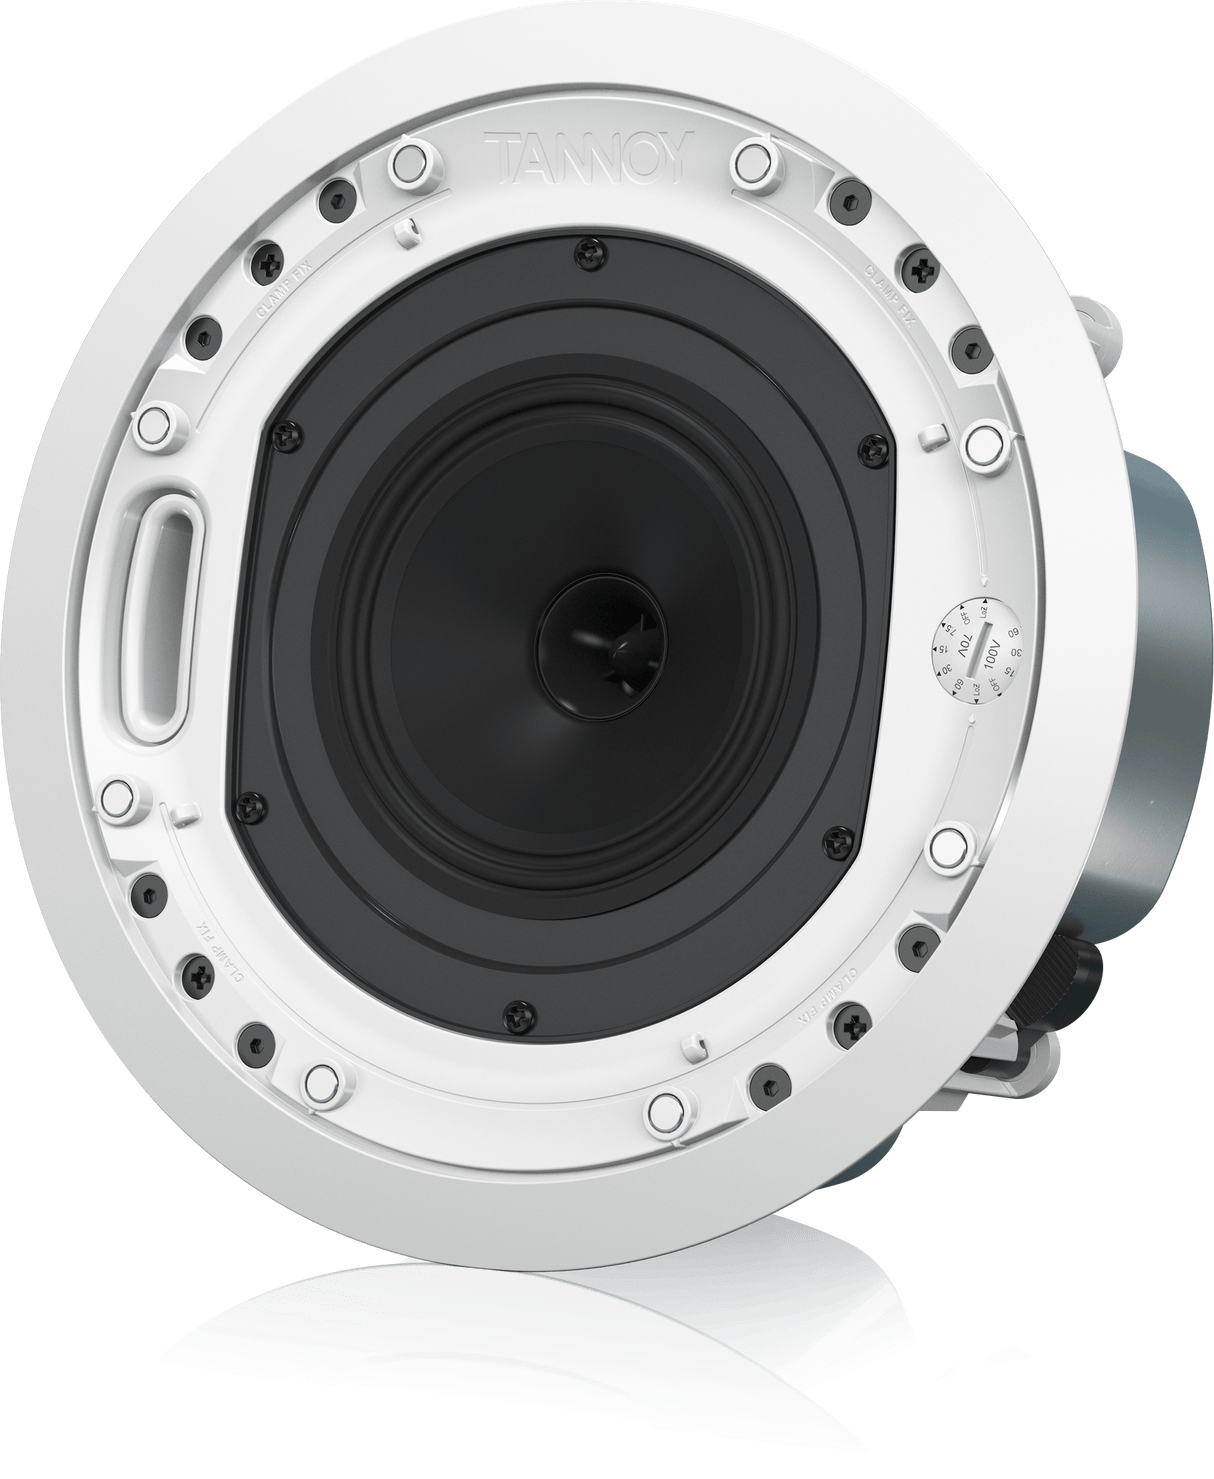 CMS503DC-LP 5" Full Range Ceiling Loudspeaker with Dual Concentric Driver Low Profile (LP)